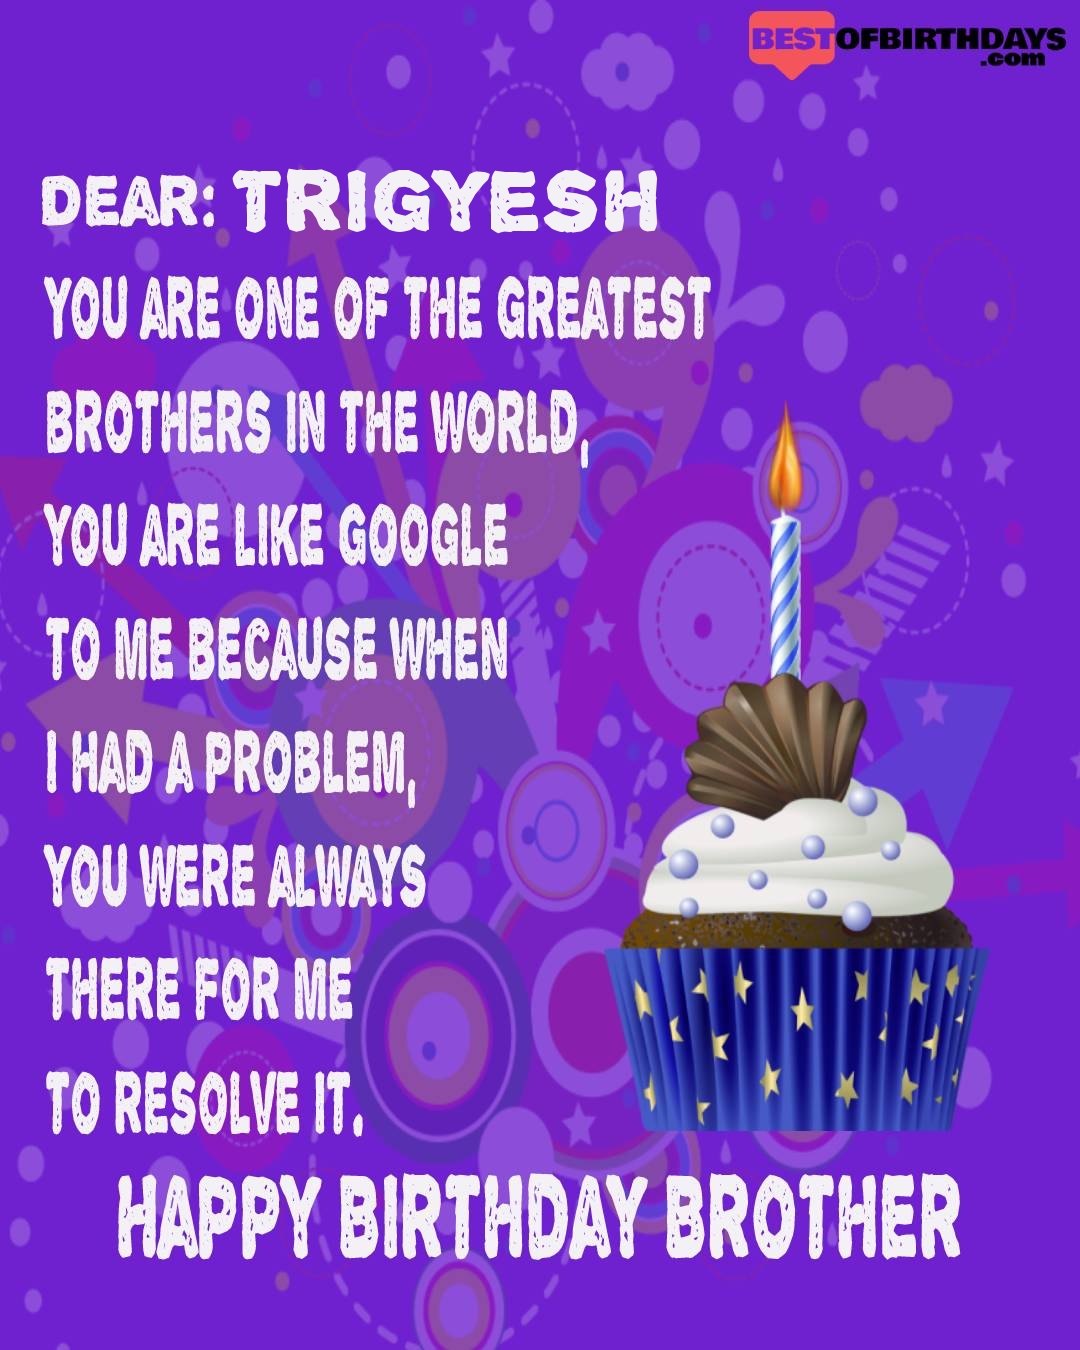 Happy birthday trigyesh bhai brother bro